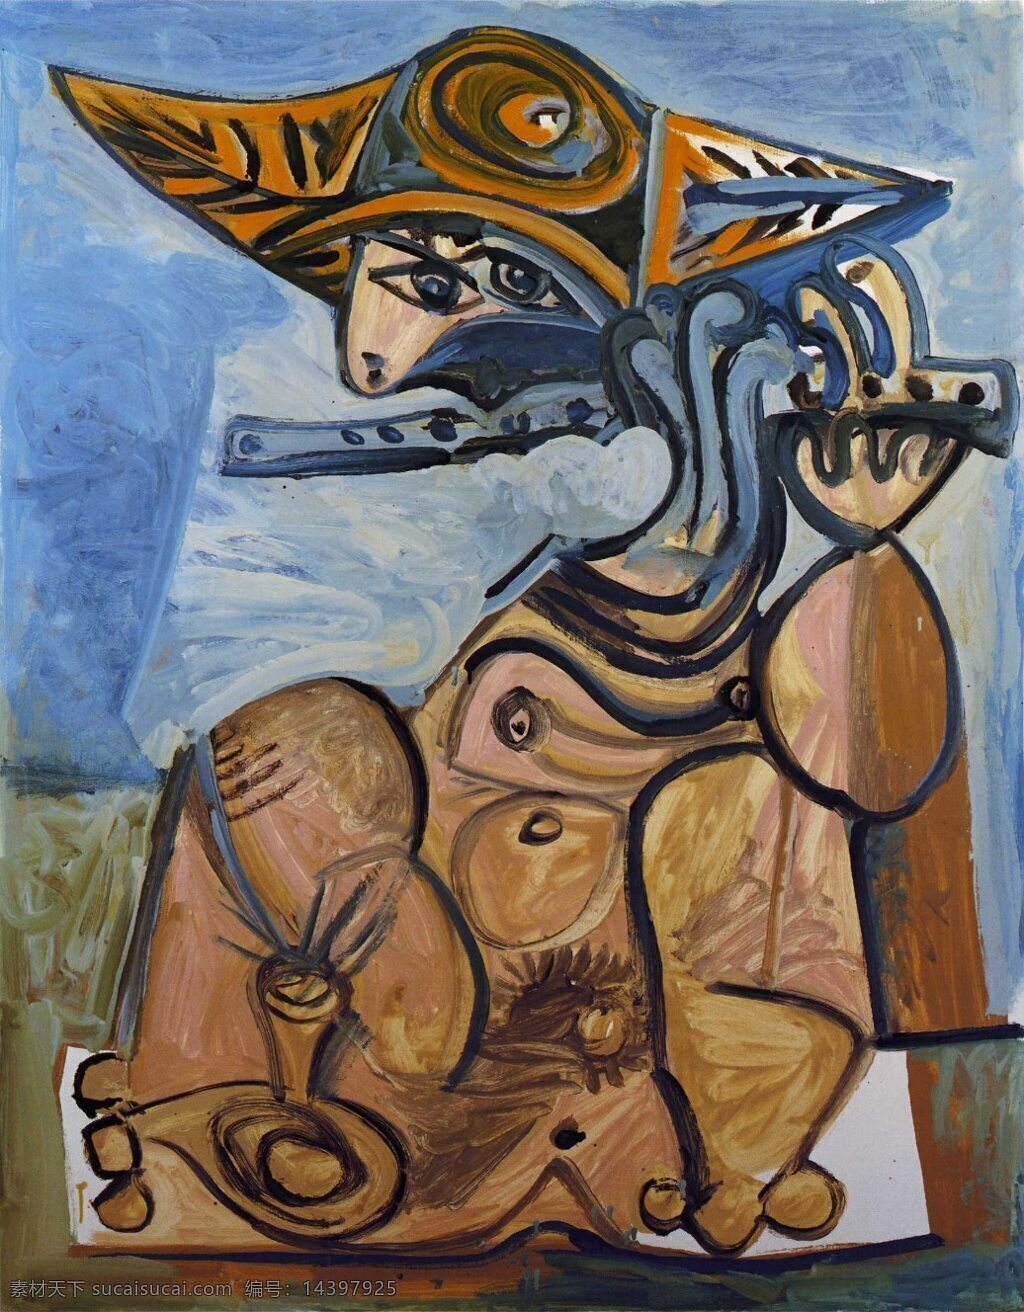 fl 鏉 西班牙 画家 巴勃罗 毕加索 抽象 油画 人物 人体 装饰画 la de jouant assis homme fl鏉ste 1971 家居装饰素材